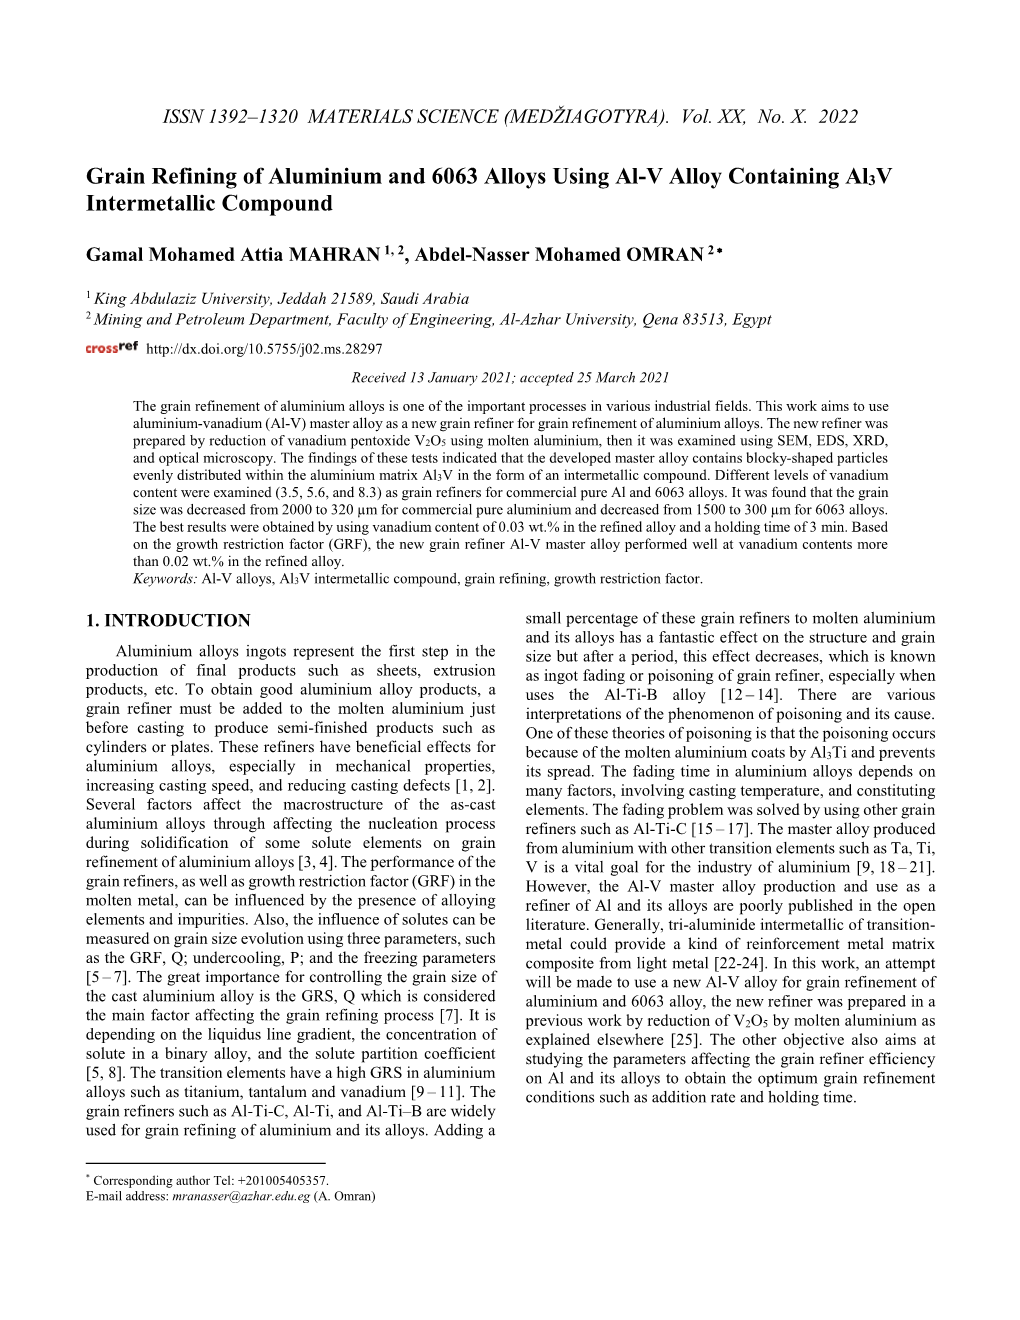 Grain Refining of Aluminium and 6063 Alloys Using Al-V Alloy Containing Al3v Intermetallic Compound